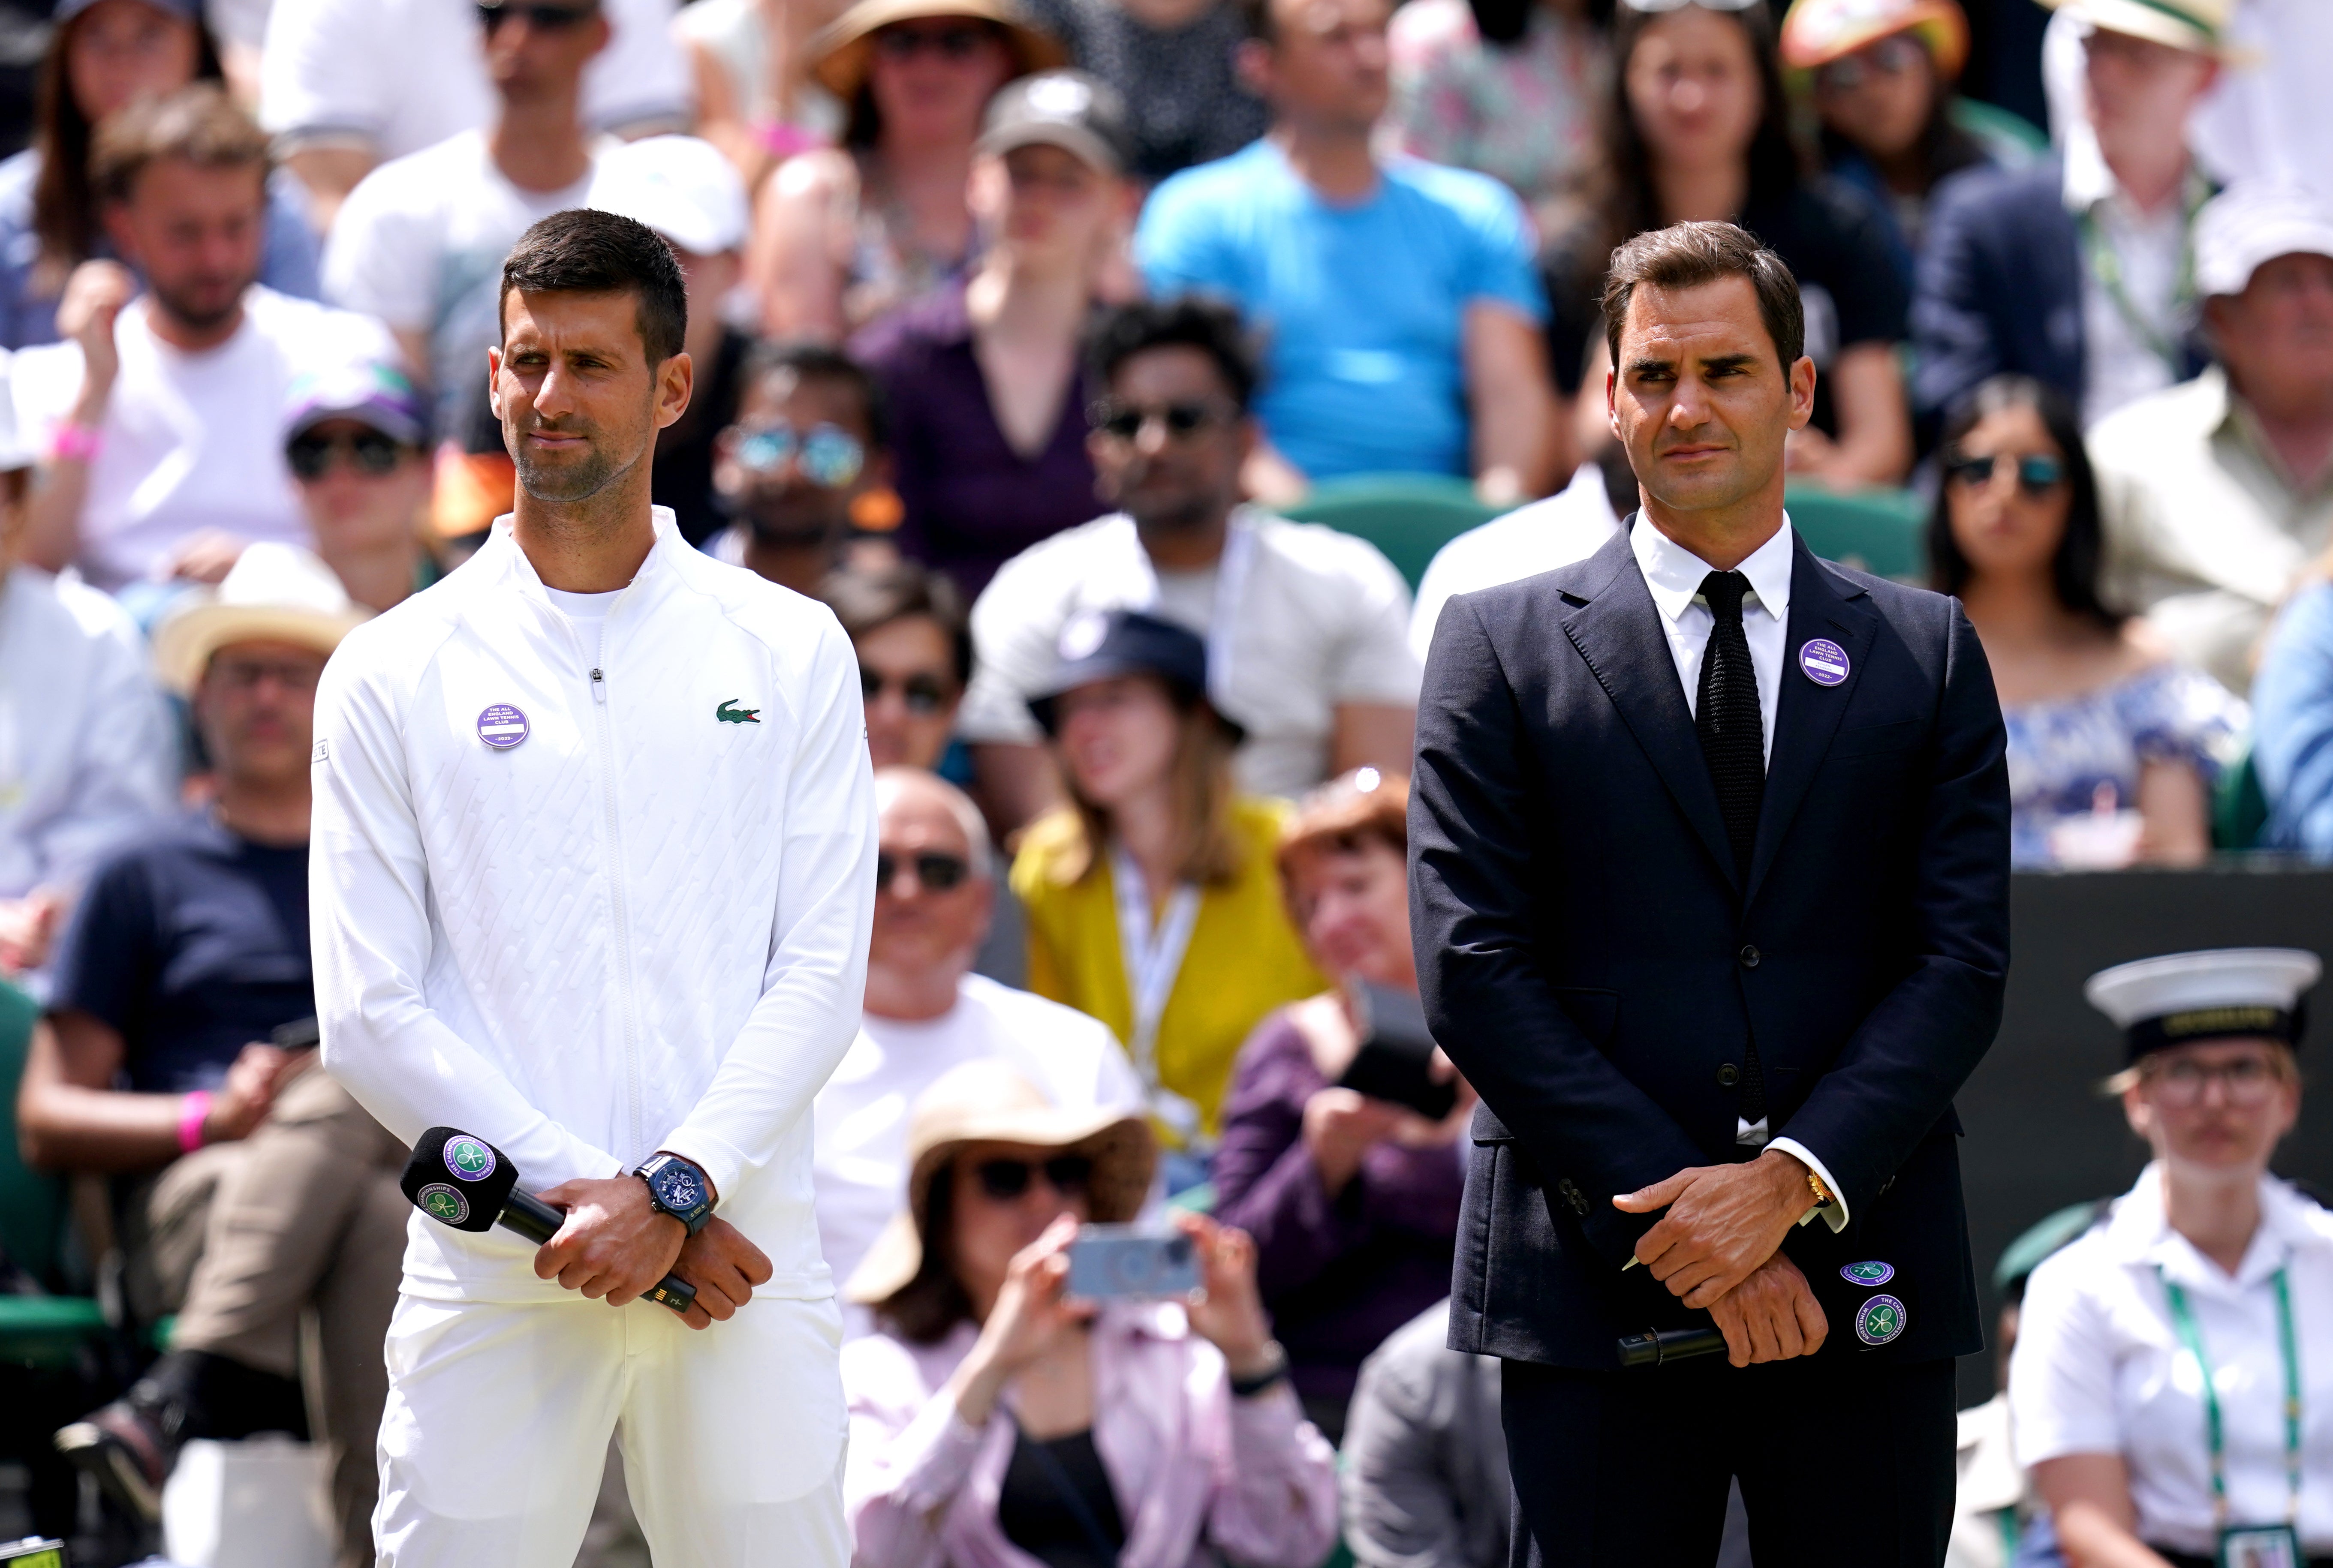 Former Wimbledon champions Novak Djokovic and Roger Federer